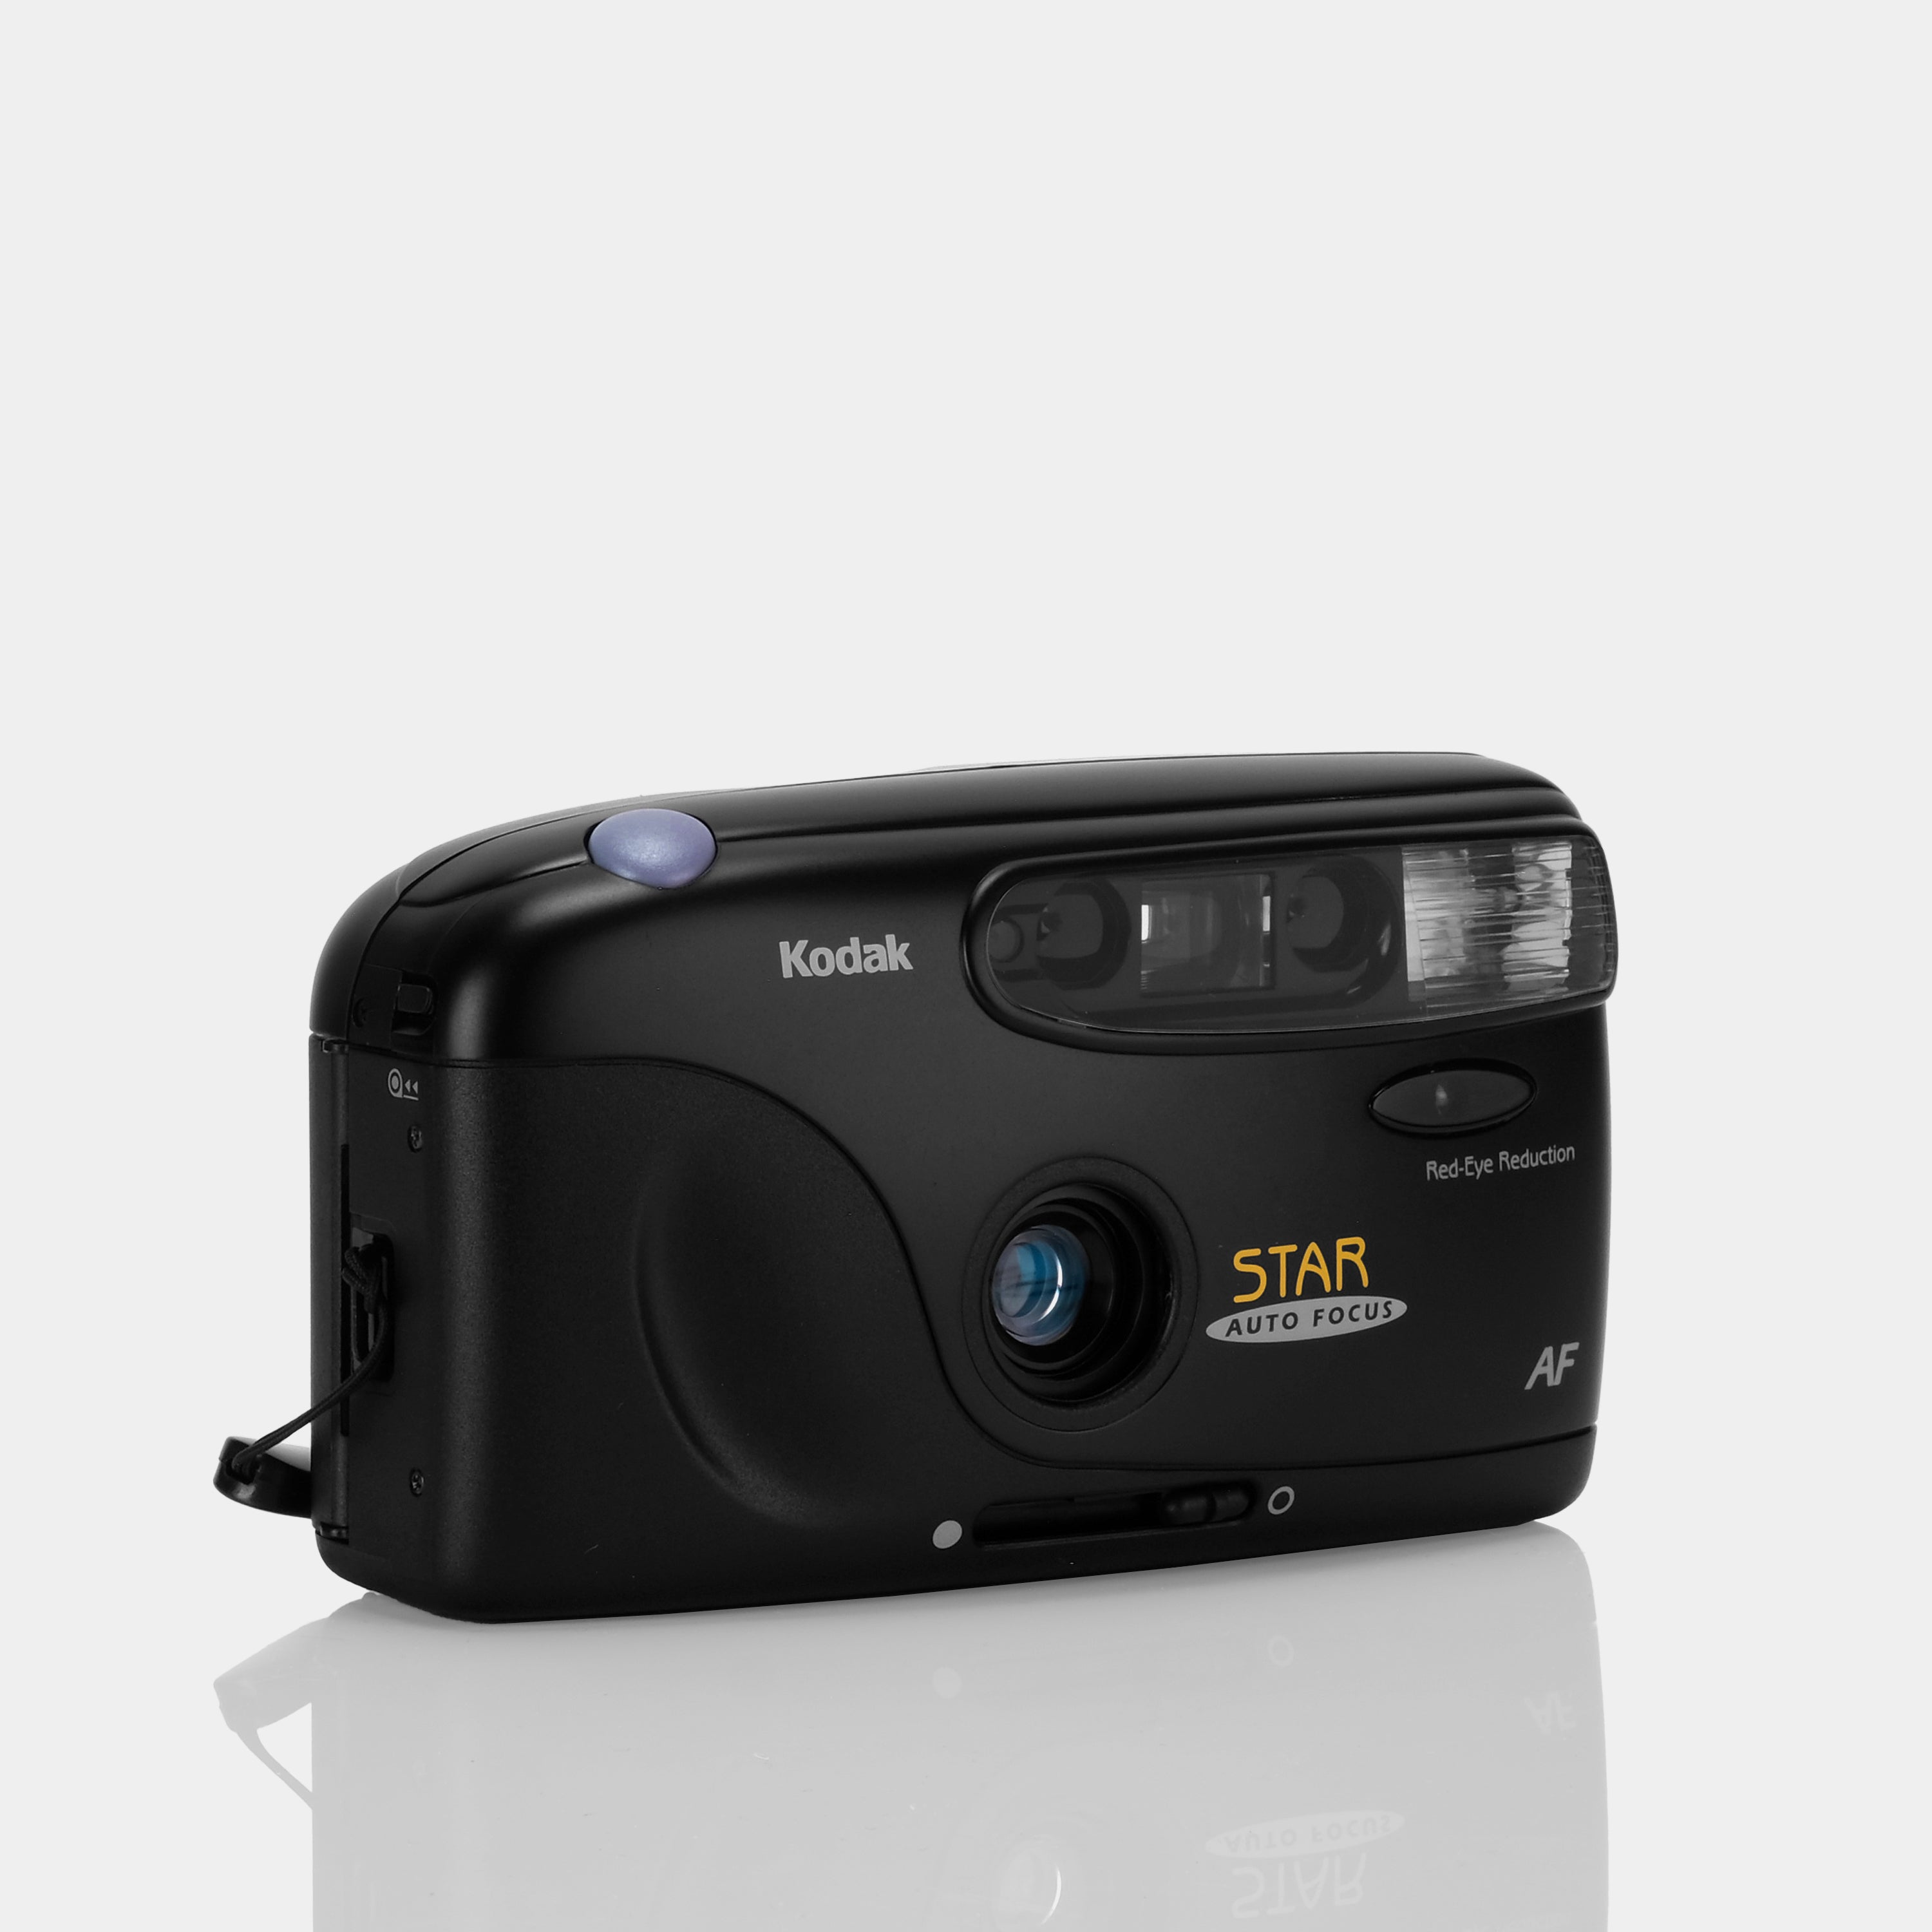 Kodak Star Auto Focus 35mm Point and Shoot Film Camera